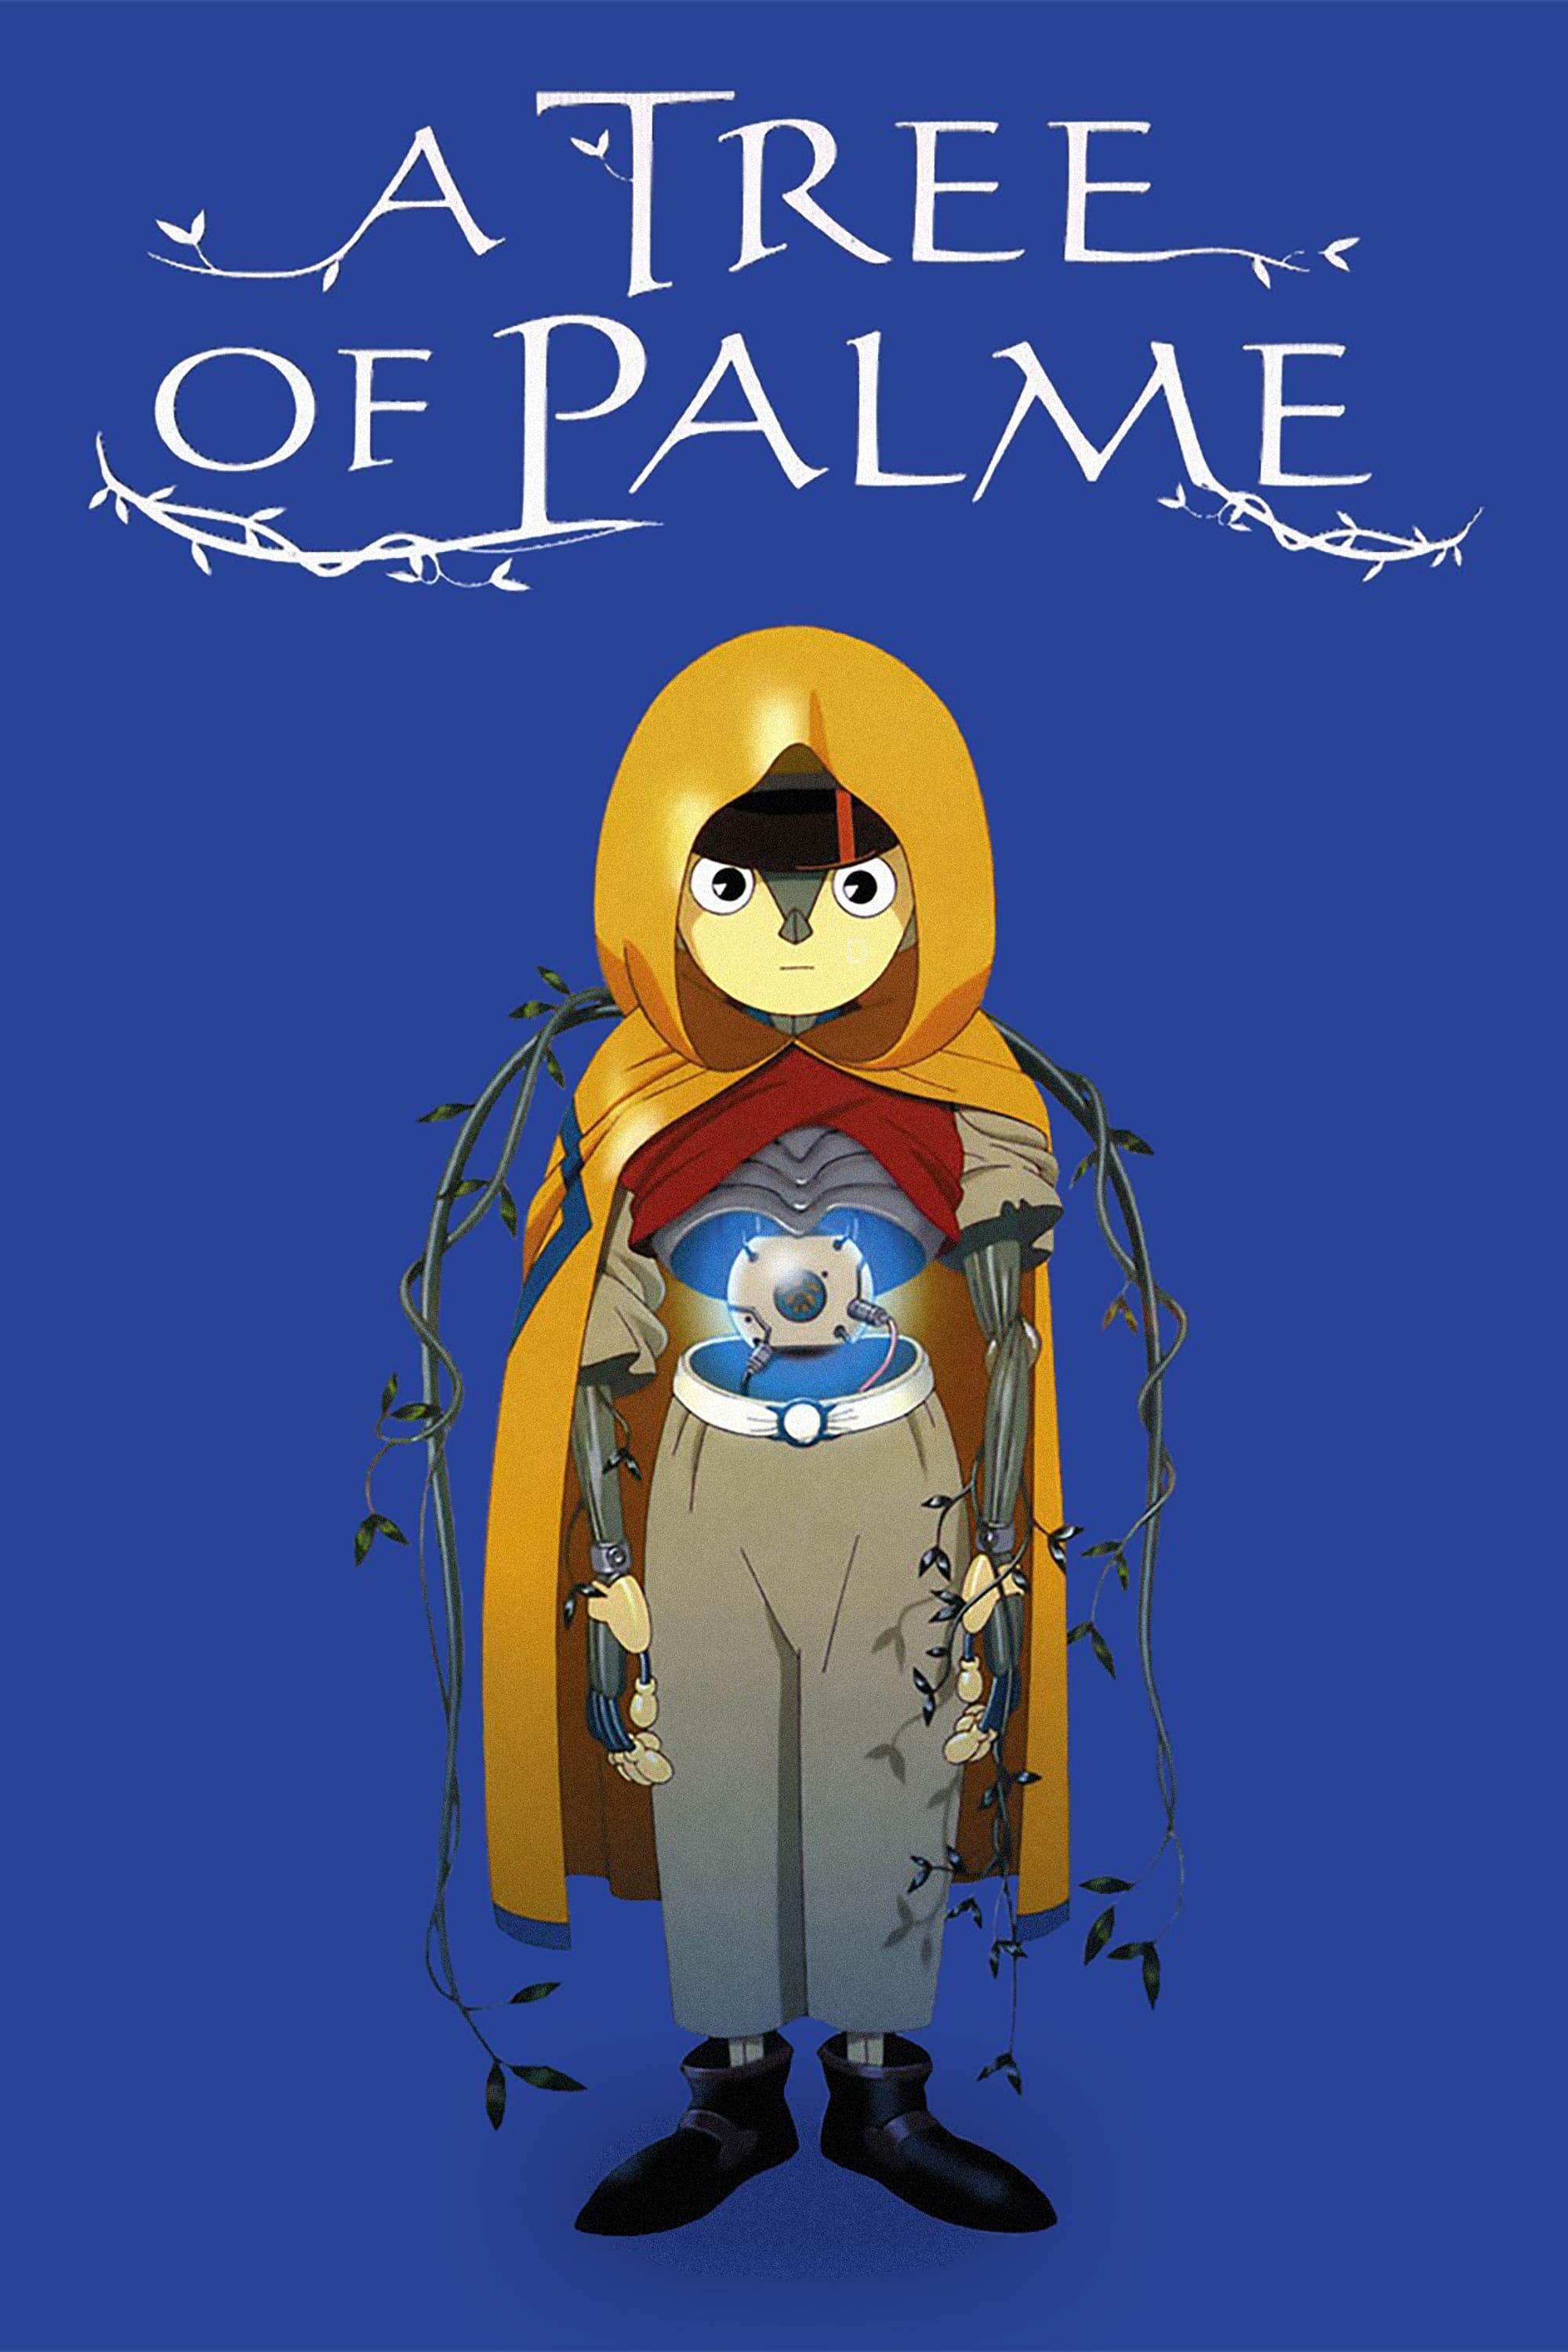 A Tree of Palme poster